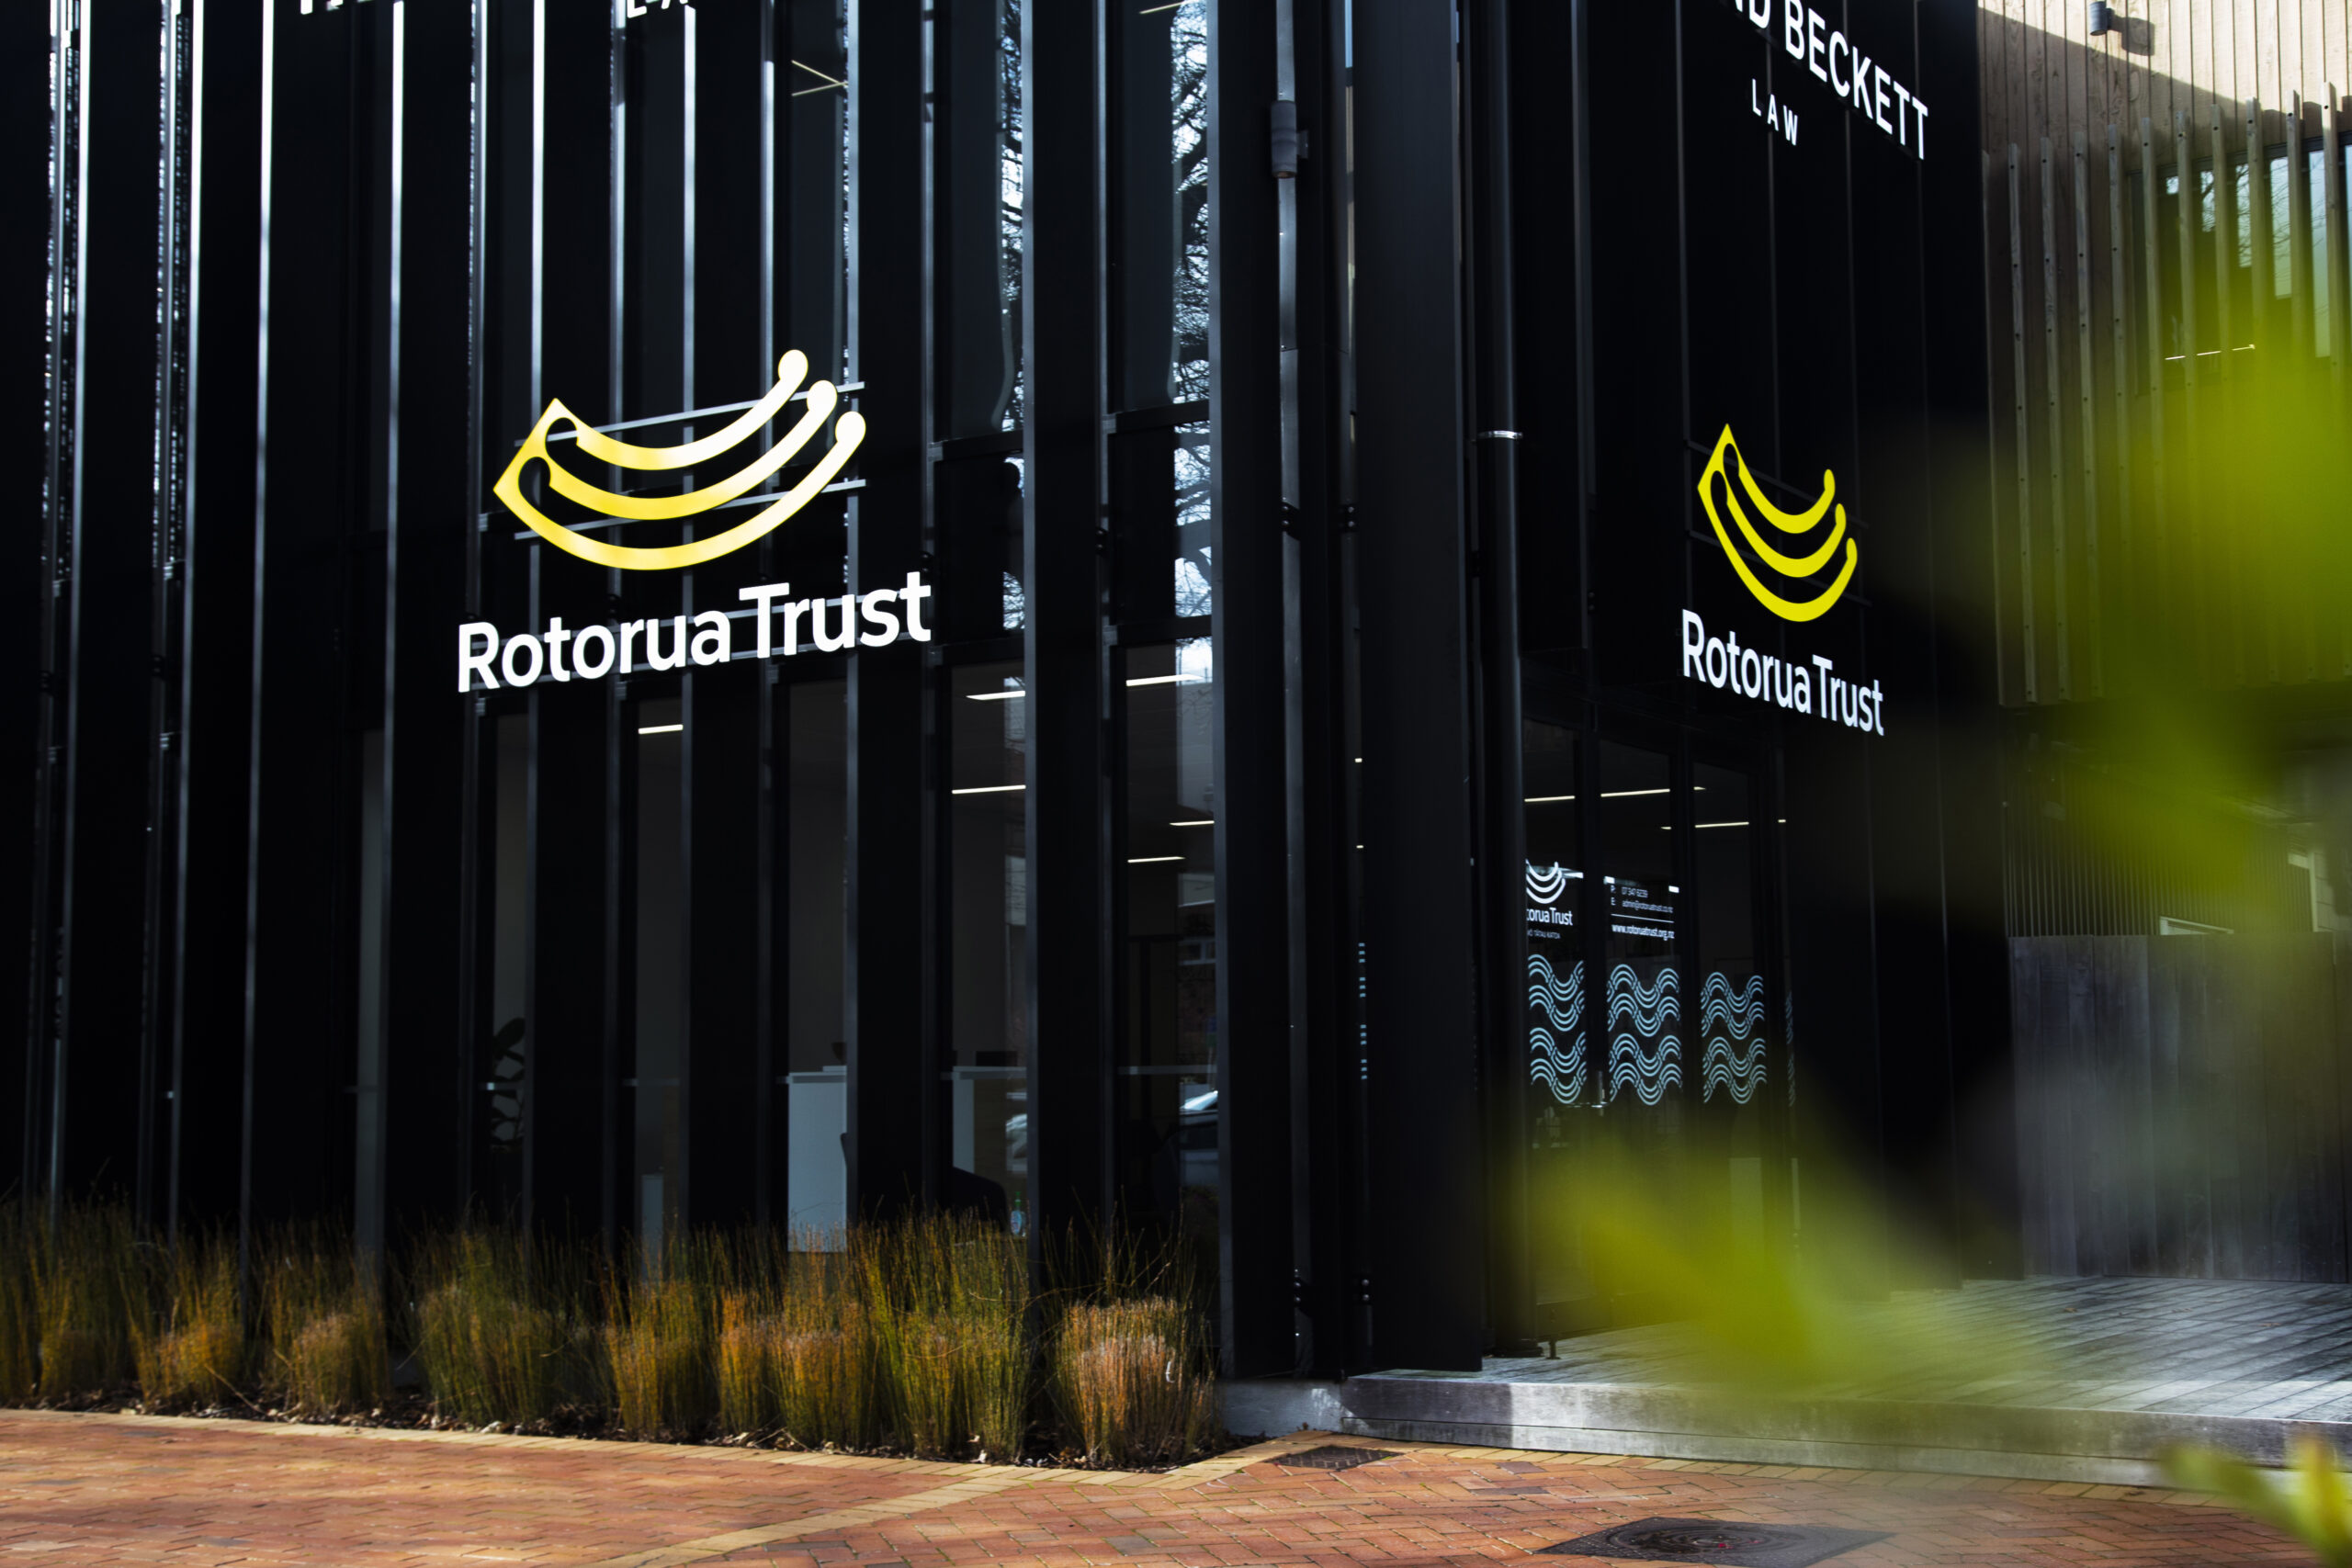 rotorua trust nominations are open